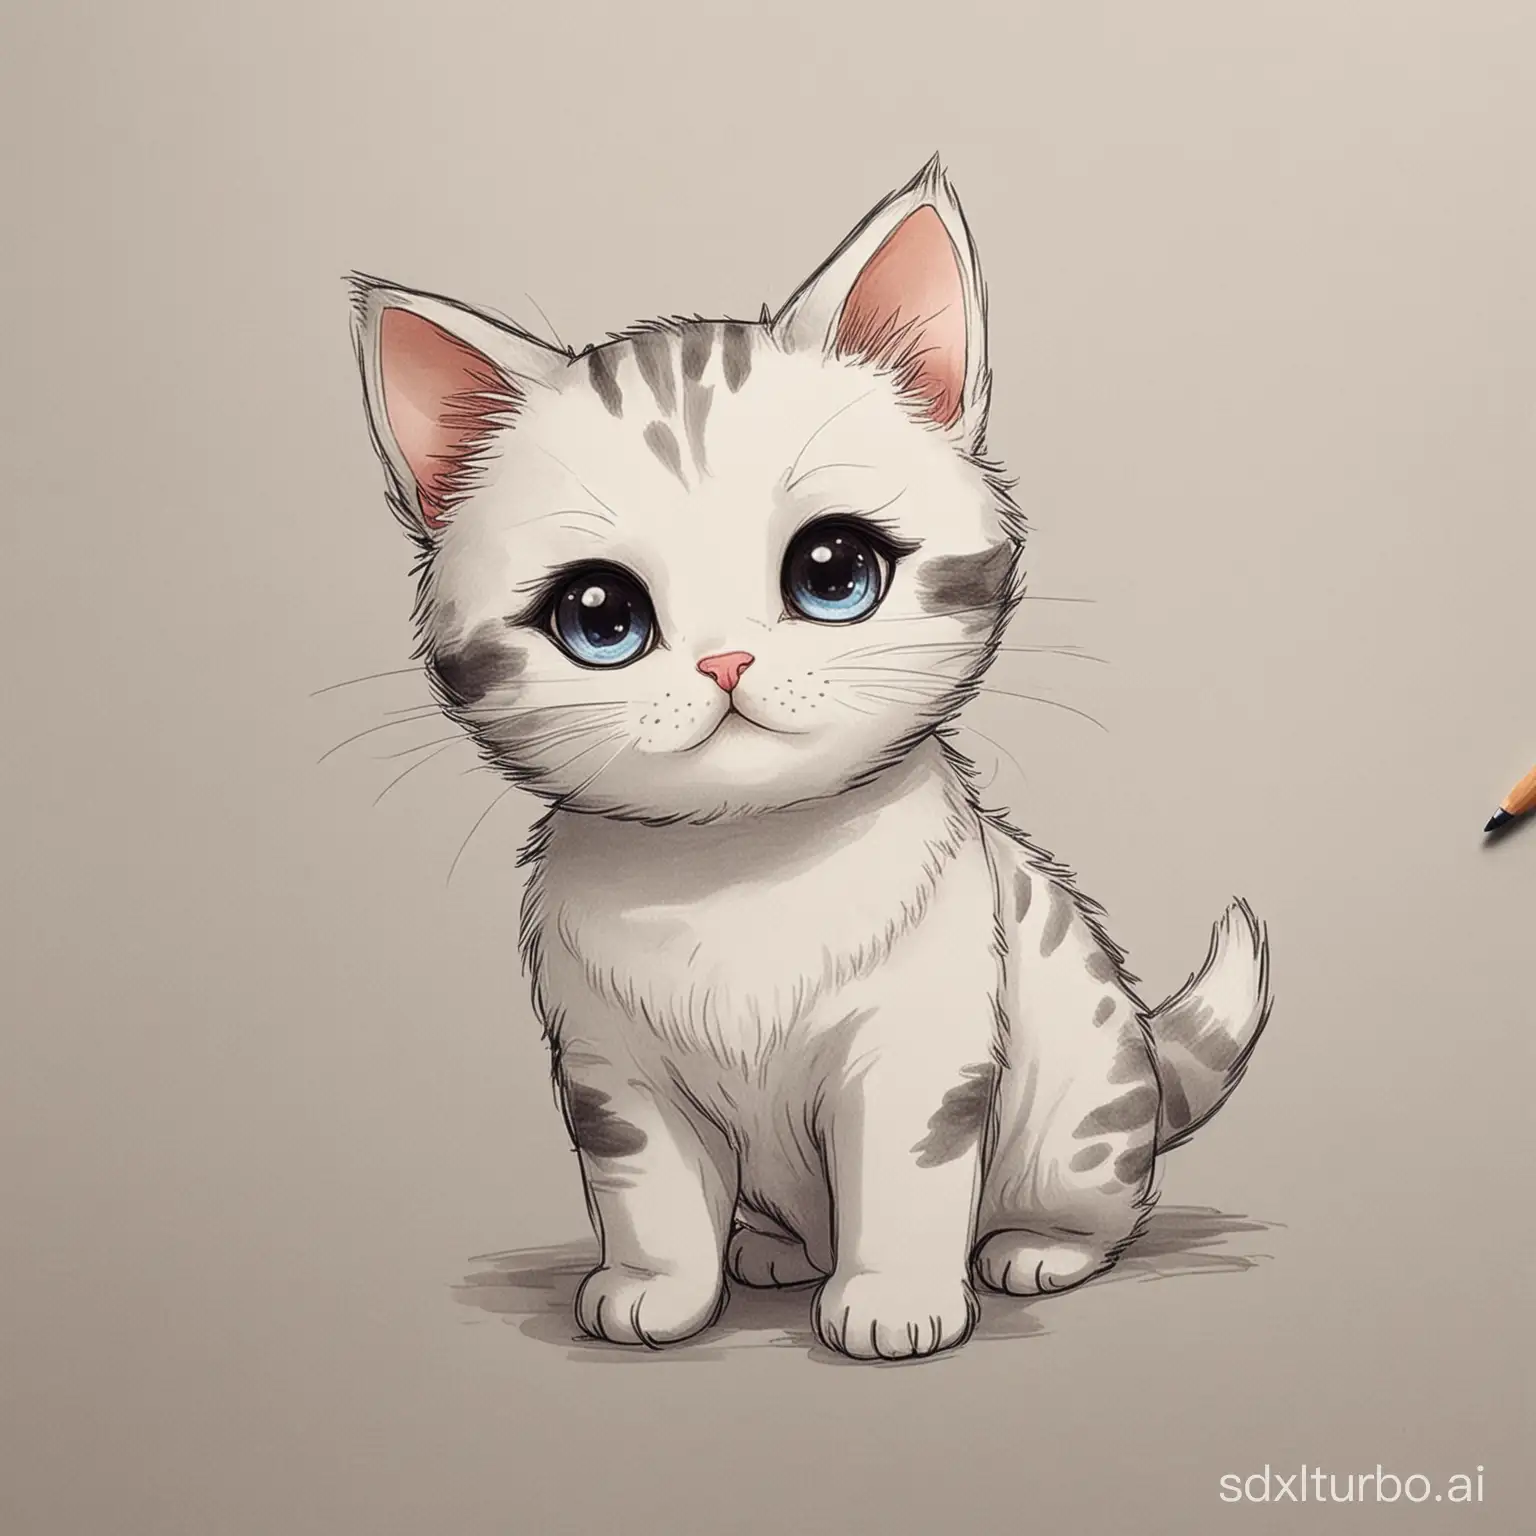 Draw a very cute little cat